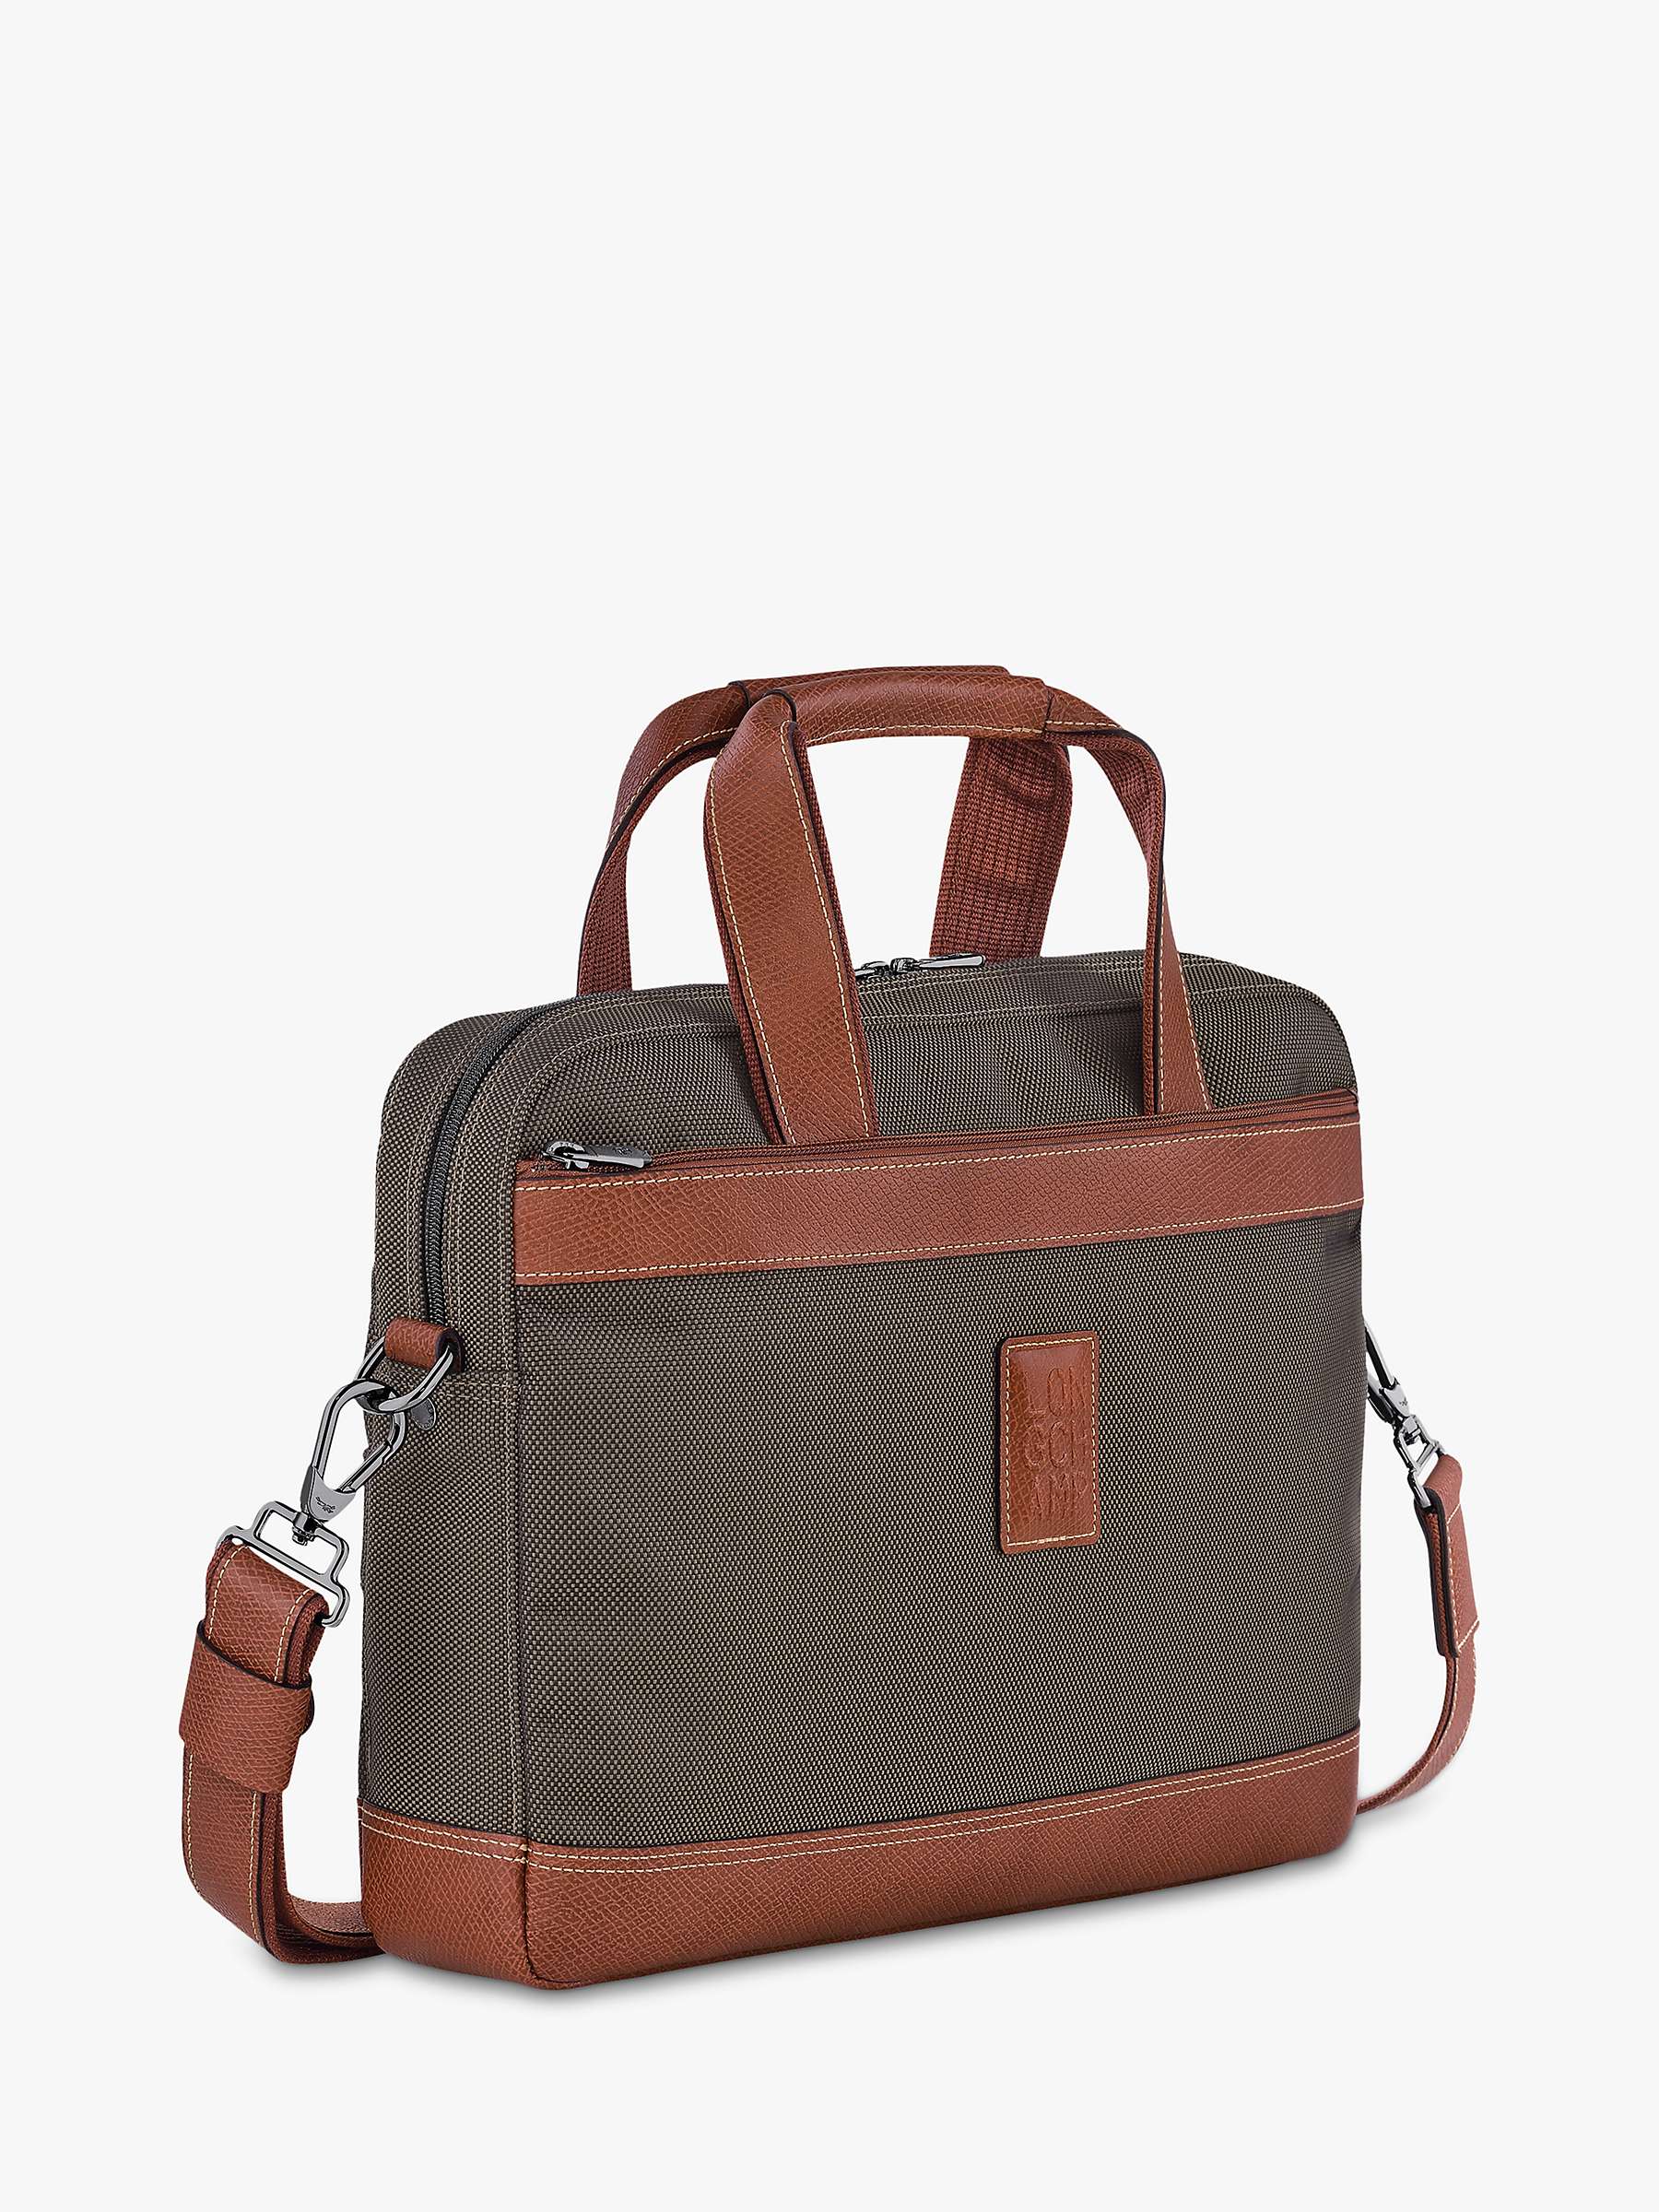 Buy Longchamp Boxford Briefcase Online at johnlewis.com